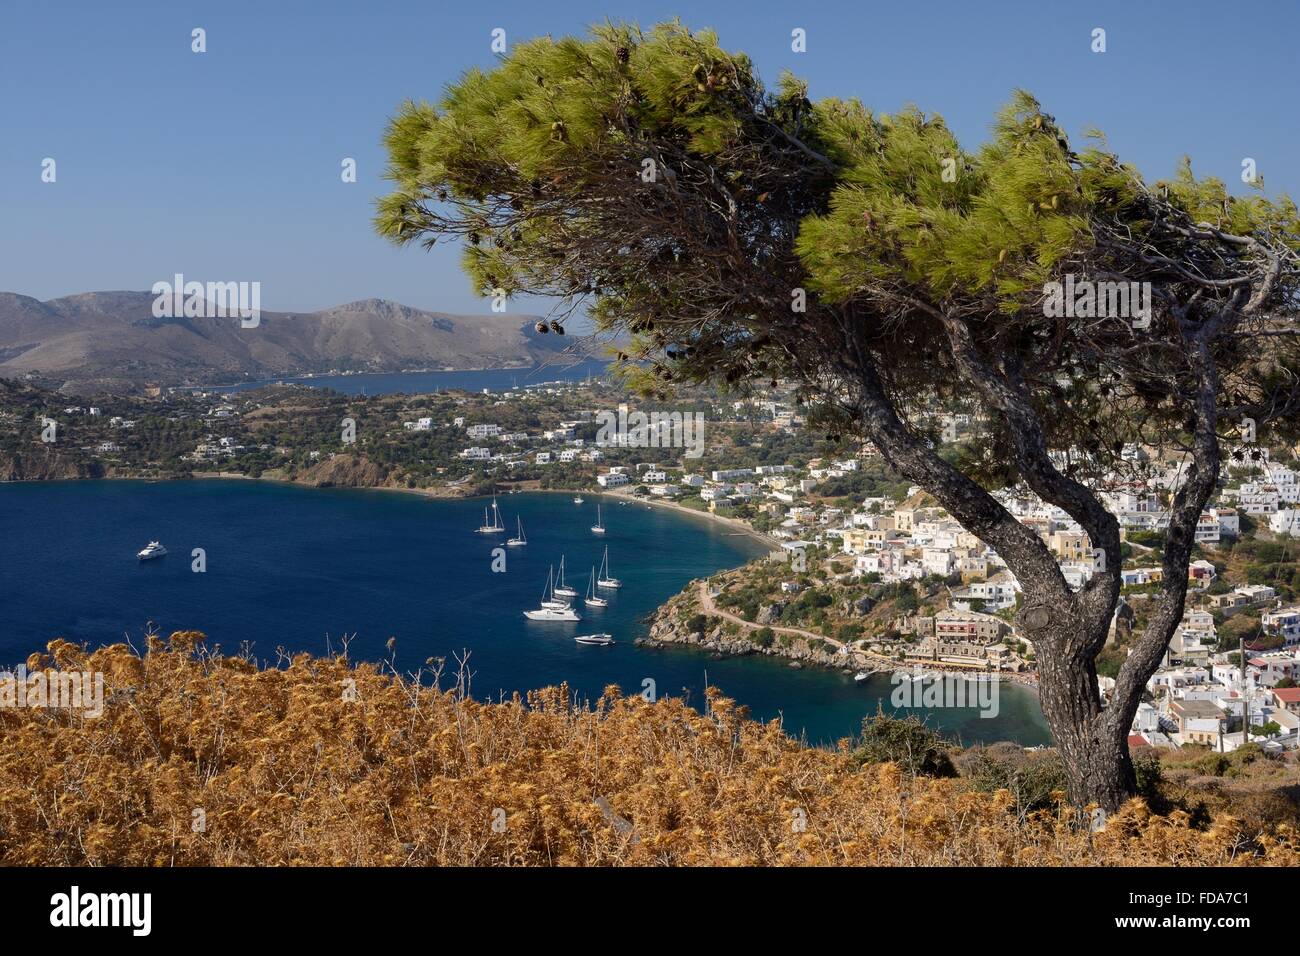 Turkish pine tree (Pinus brutia) on a hilltop above Panteli harbour and village, Leros, Dodecanese Islands, Greece. Stock Photo